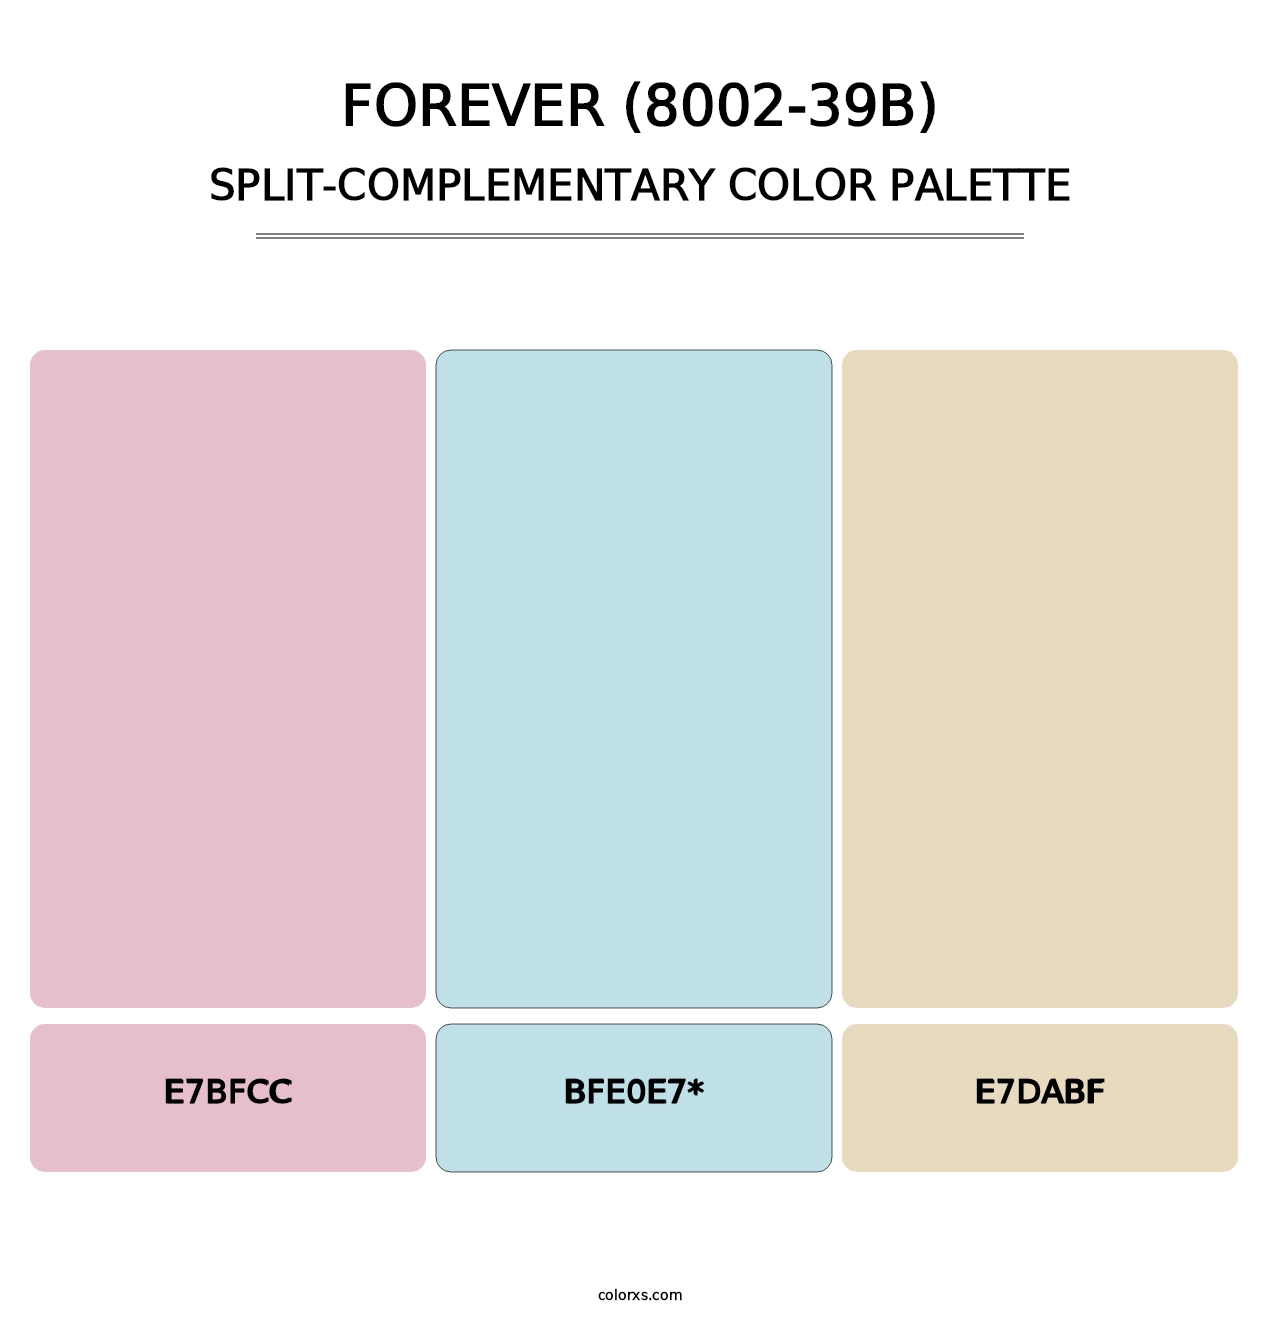 Forever (8002-39B) - Split-Complementary Color Palette